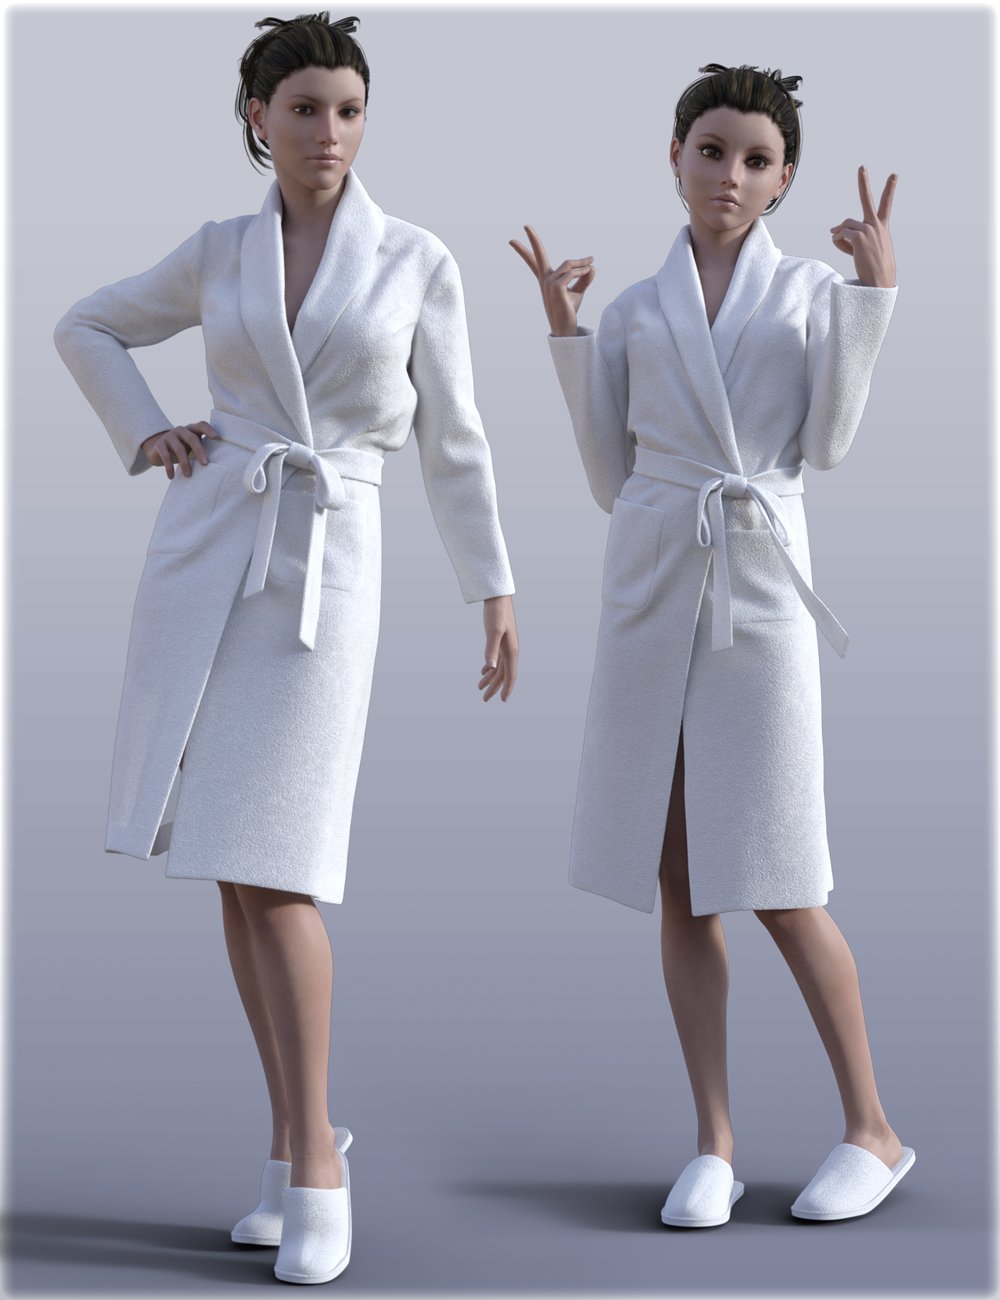 H&C Bathrobe Set for Genesis 3 Female(s) by: IH Kang, 3D Models by Daz 3D